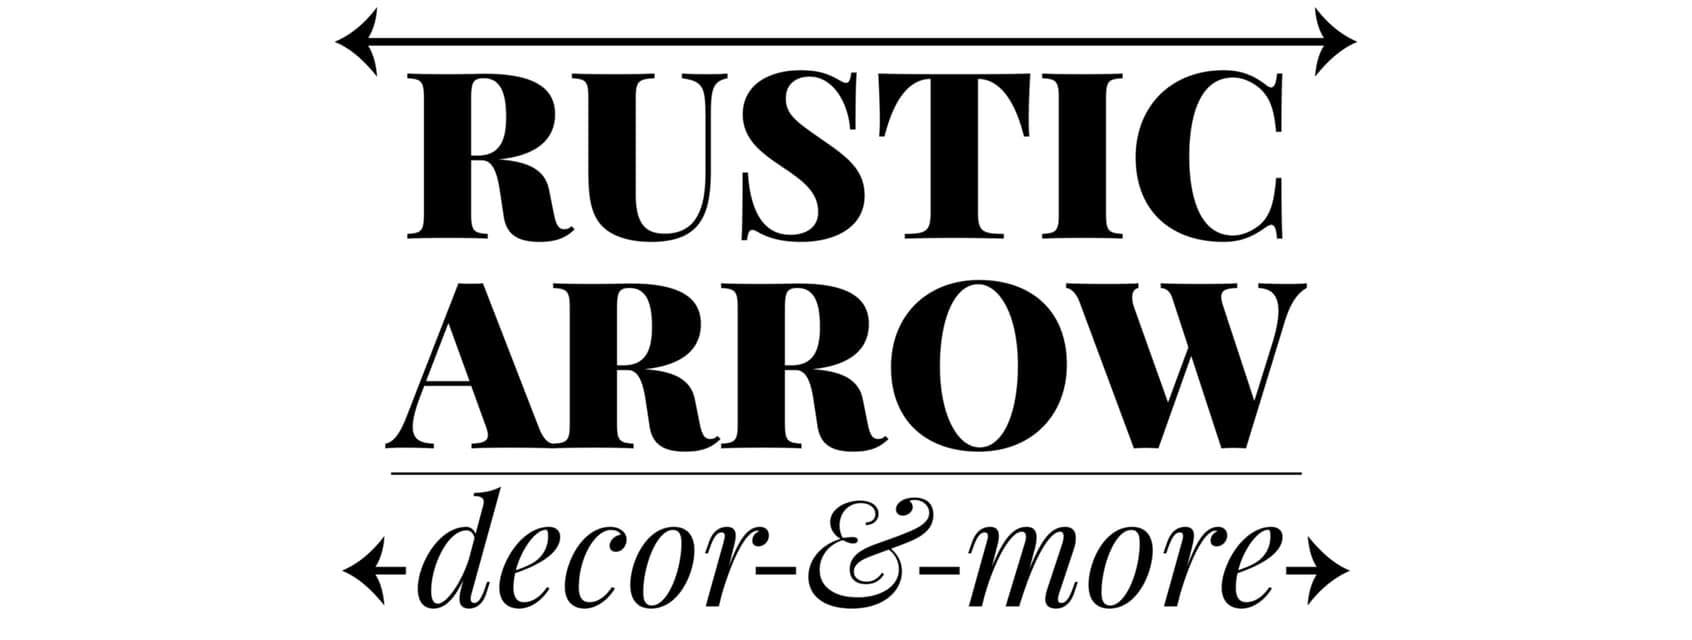 Rustic Arrow Decor & More